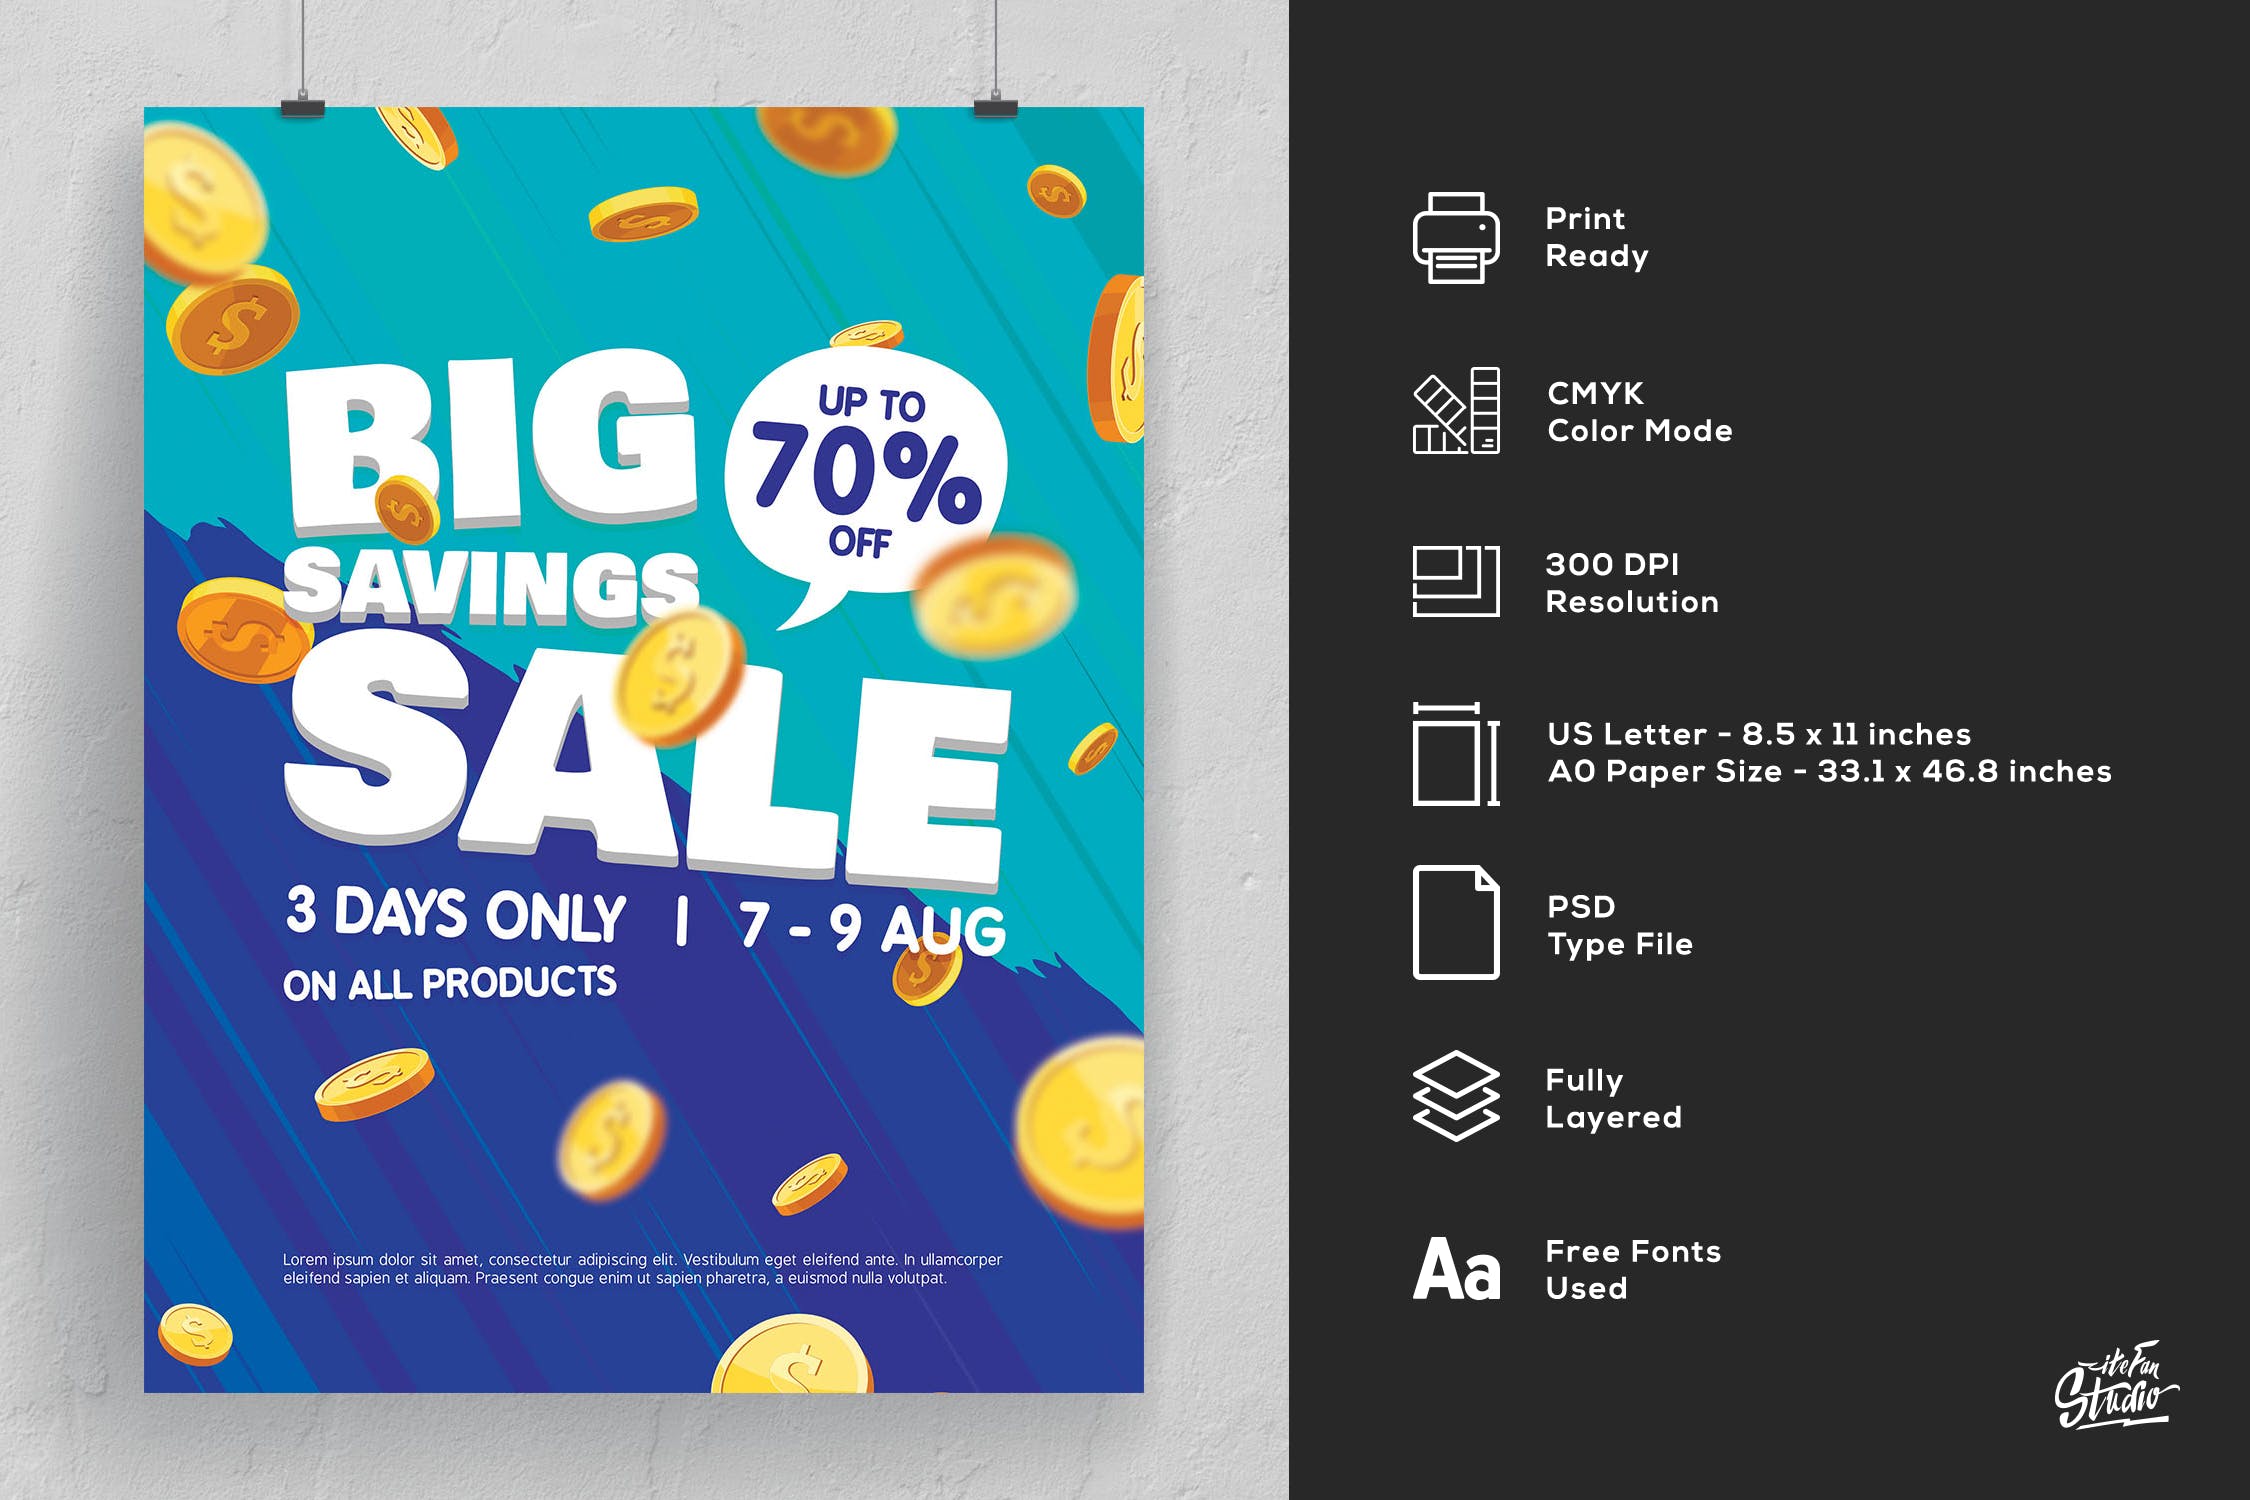 天降金币大型促销活动海报设计模板 Falling Coins Big Savings Sale Poster And Flyer插图4